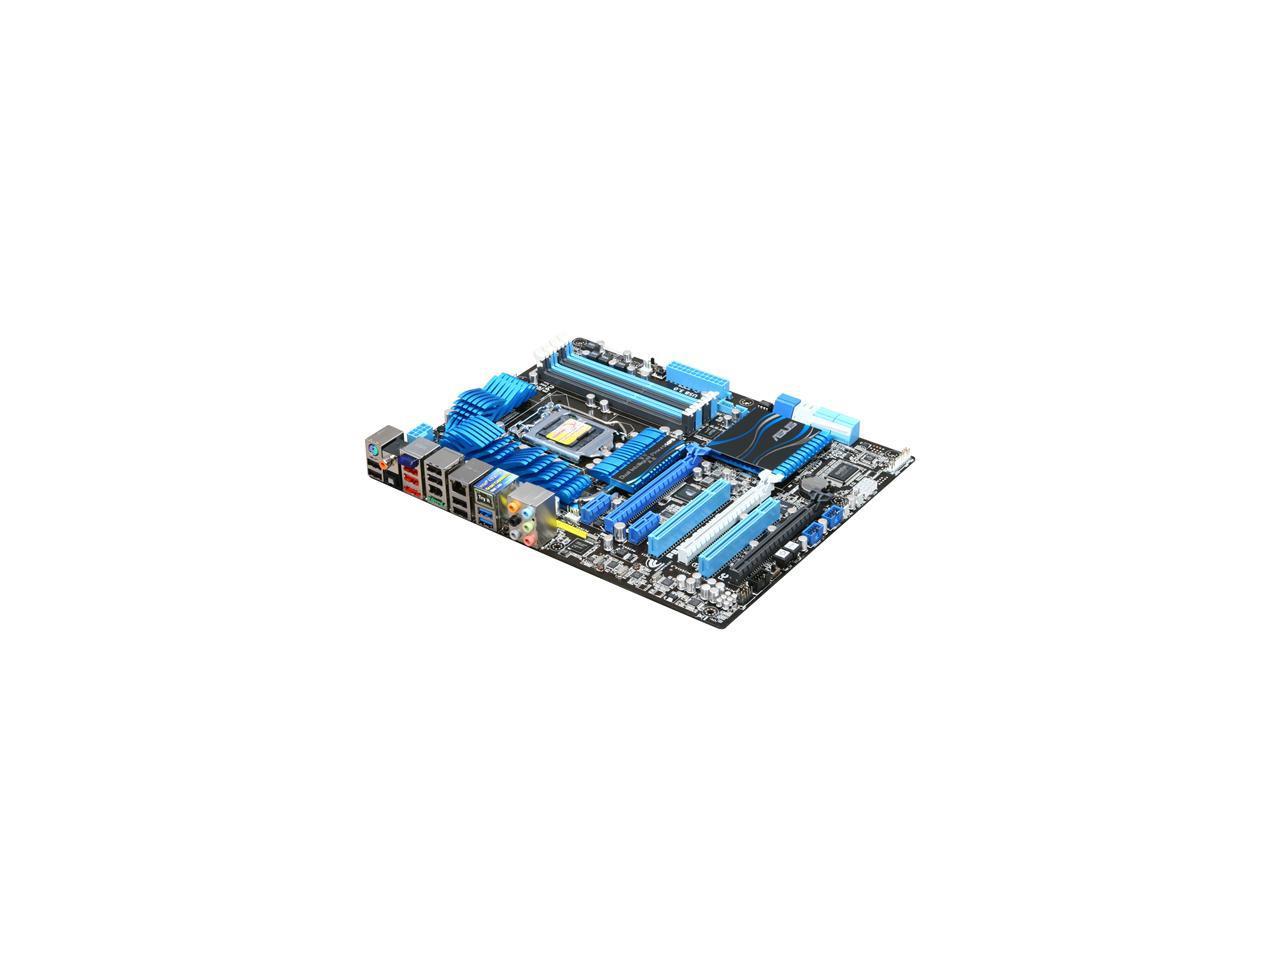 ASUS P8P67 Deluxe LGA 1155 Intel P67 SATA 6Gb/s USB 3.0 ATX Intel Motherboard